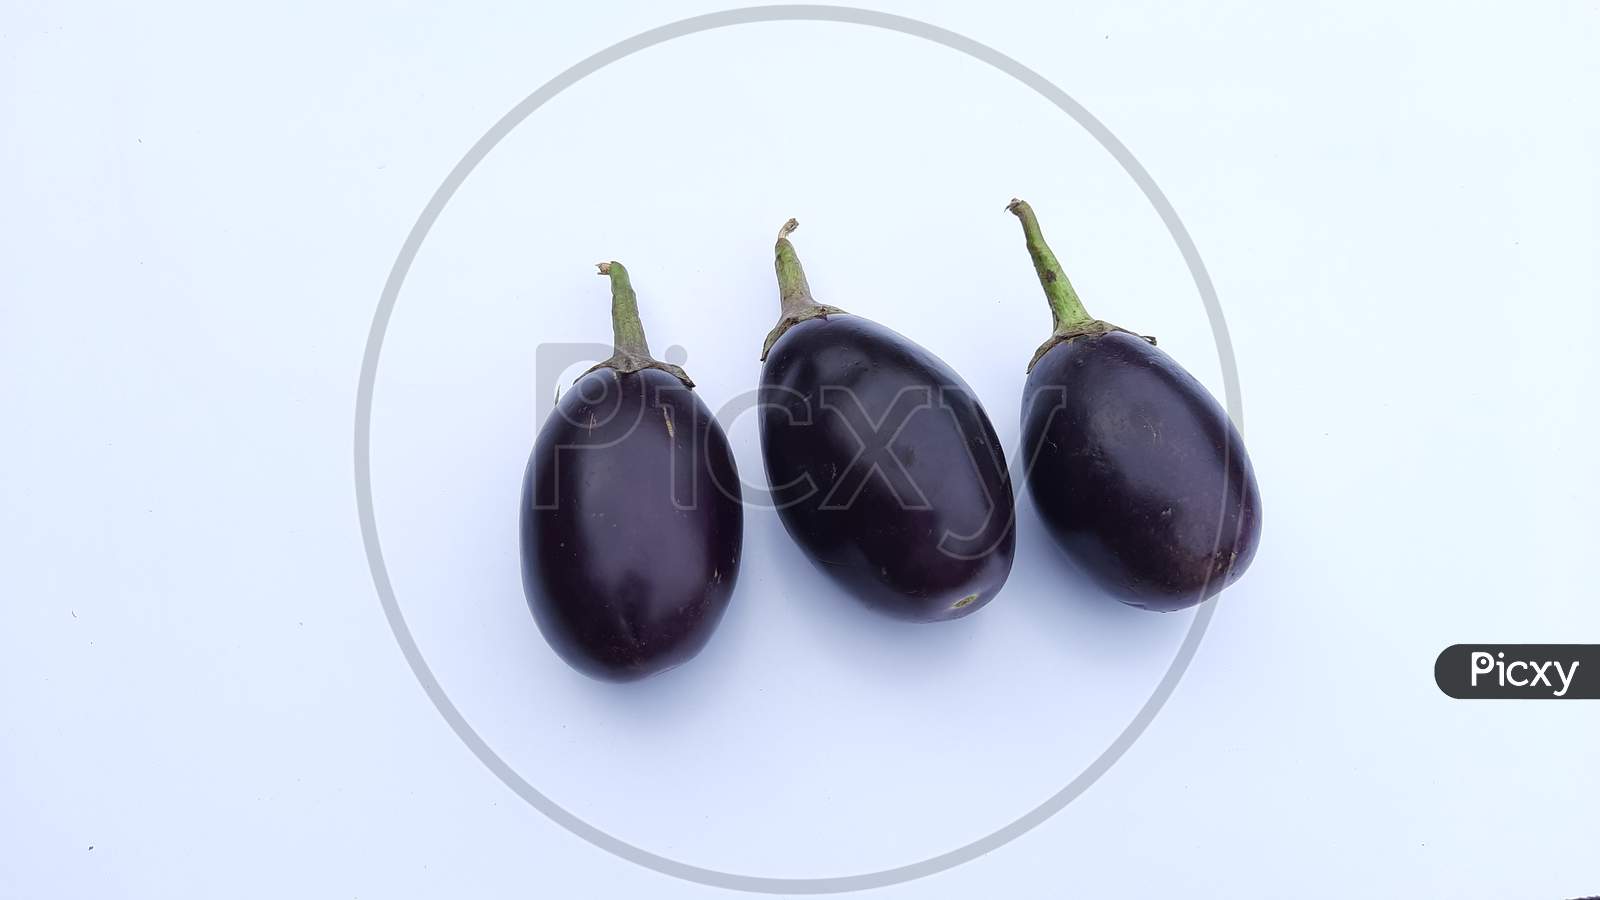 Black Eggplant image in white Background, three Eggplant image, Background Blur